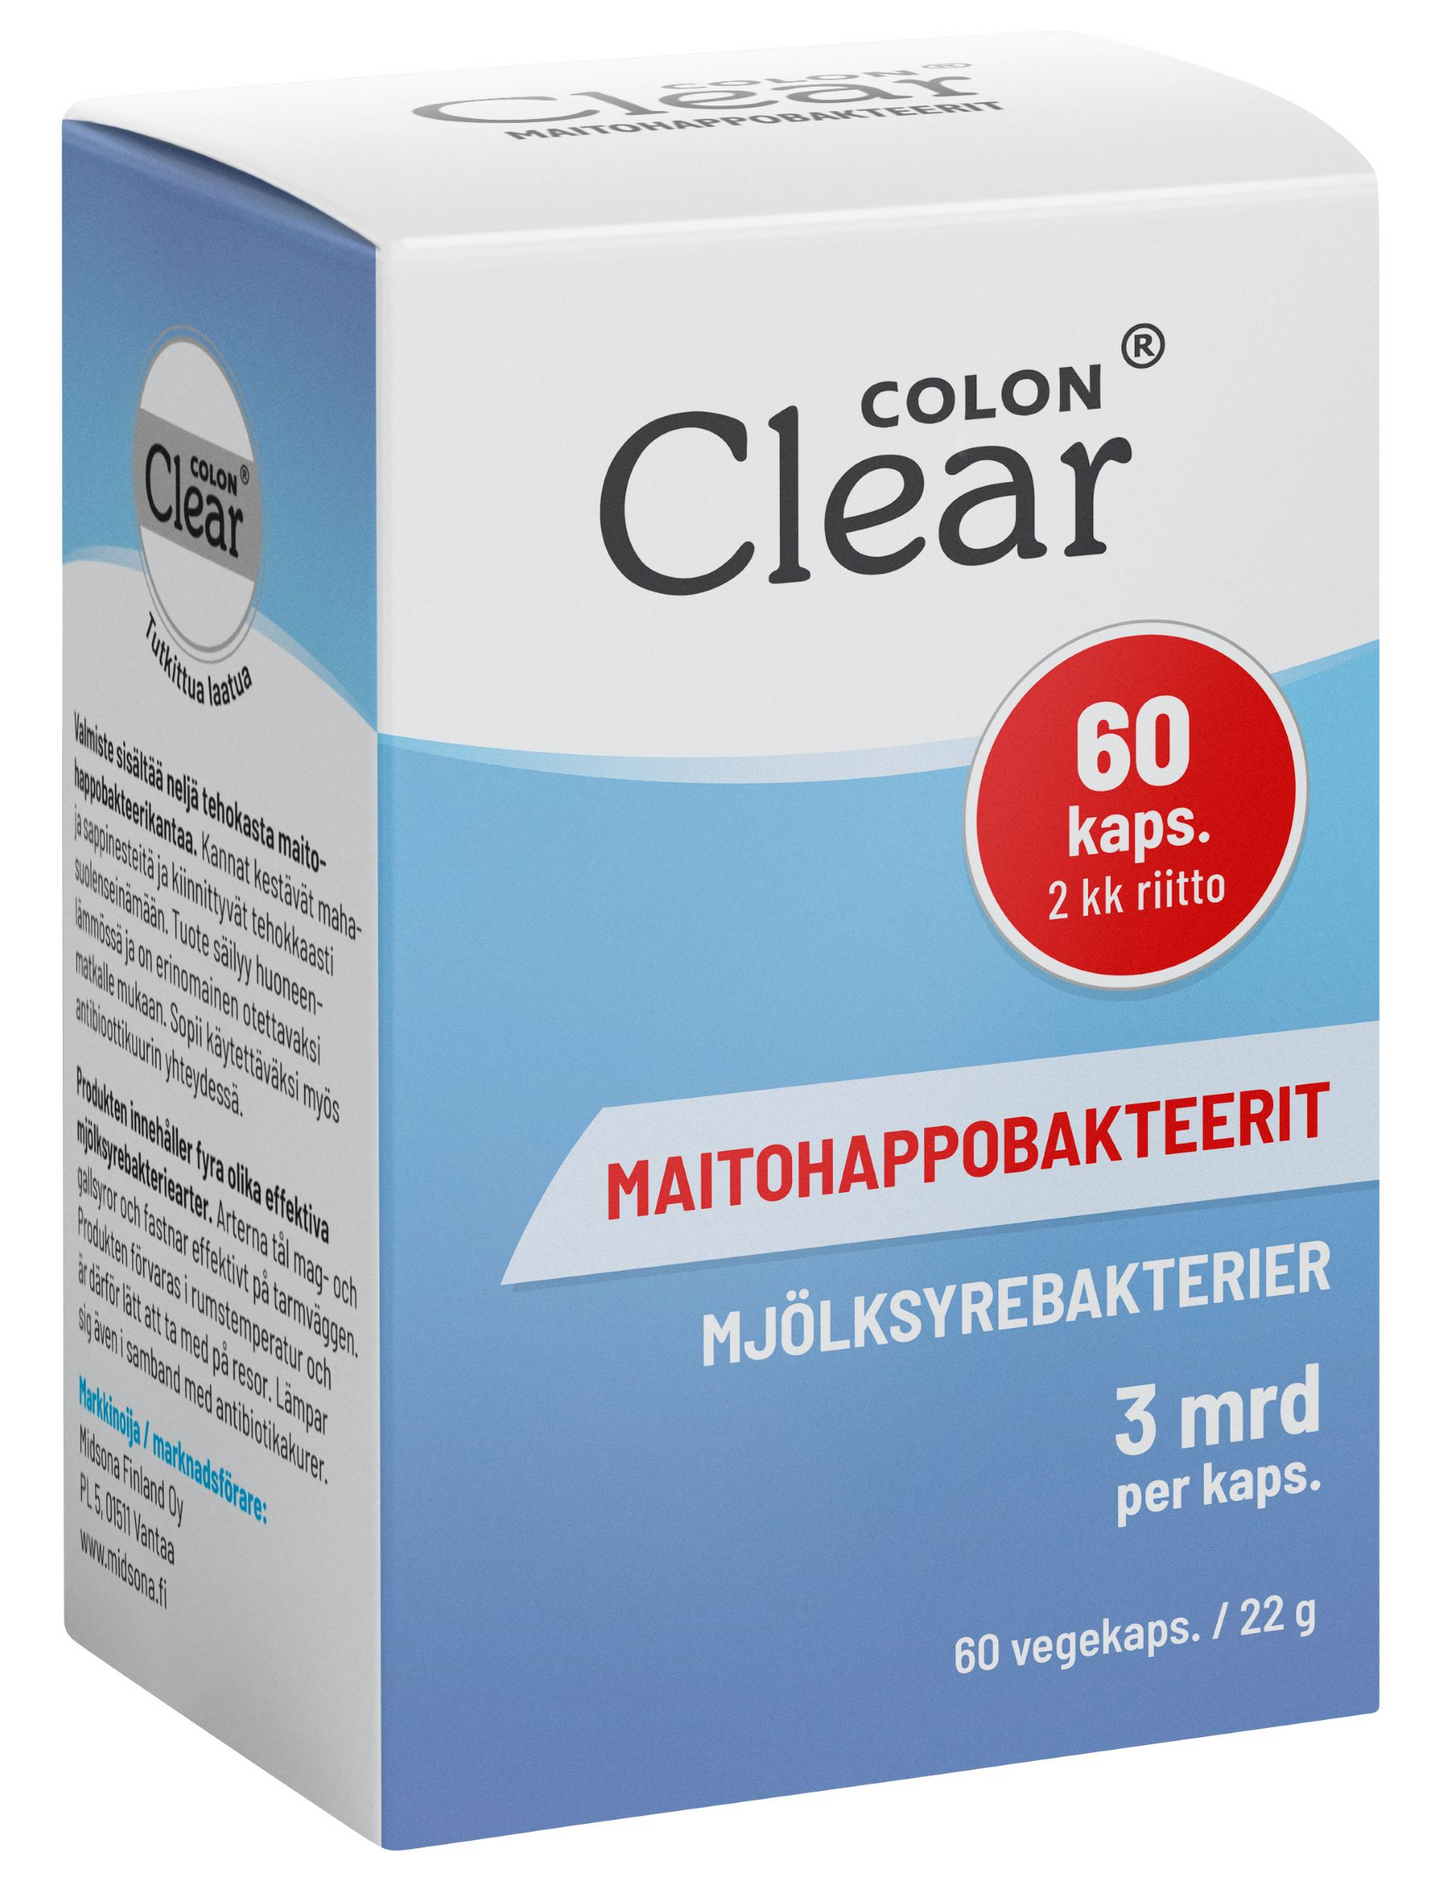 Colon Clear maitohappobakteeri 60kpl/27g